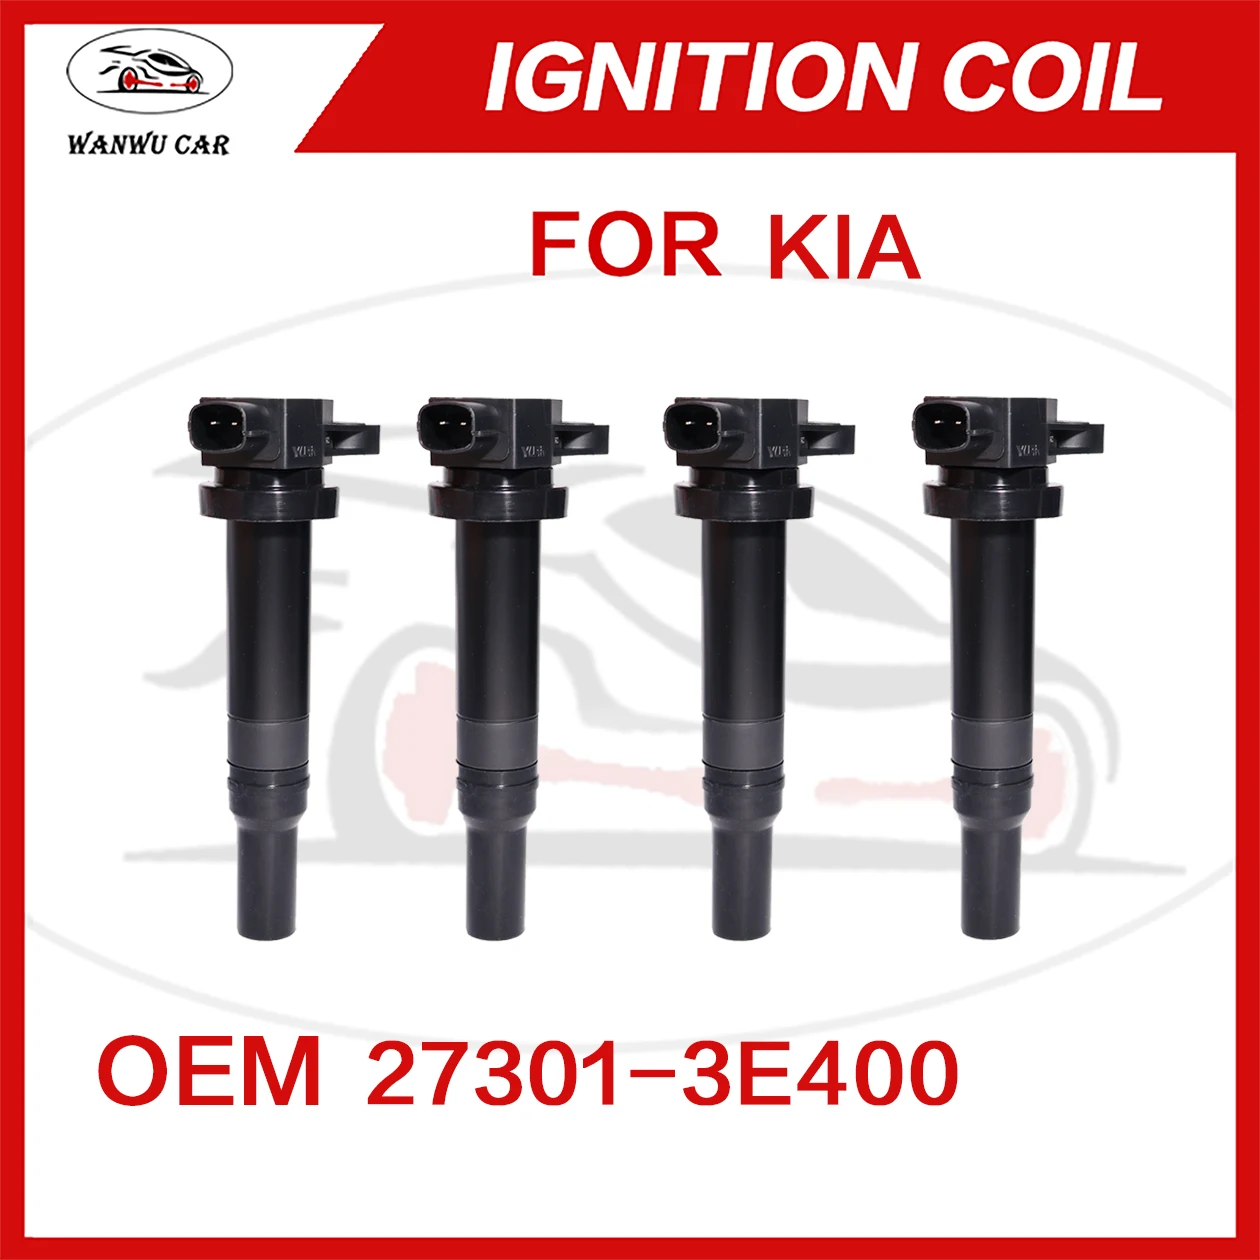 

4pcs 27301-3E400 Ignition Coil Igniter Suitable For KIA Rondo Optima Magentis Hyundai Santa Fe